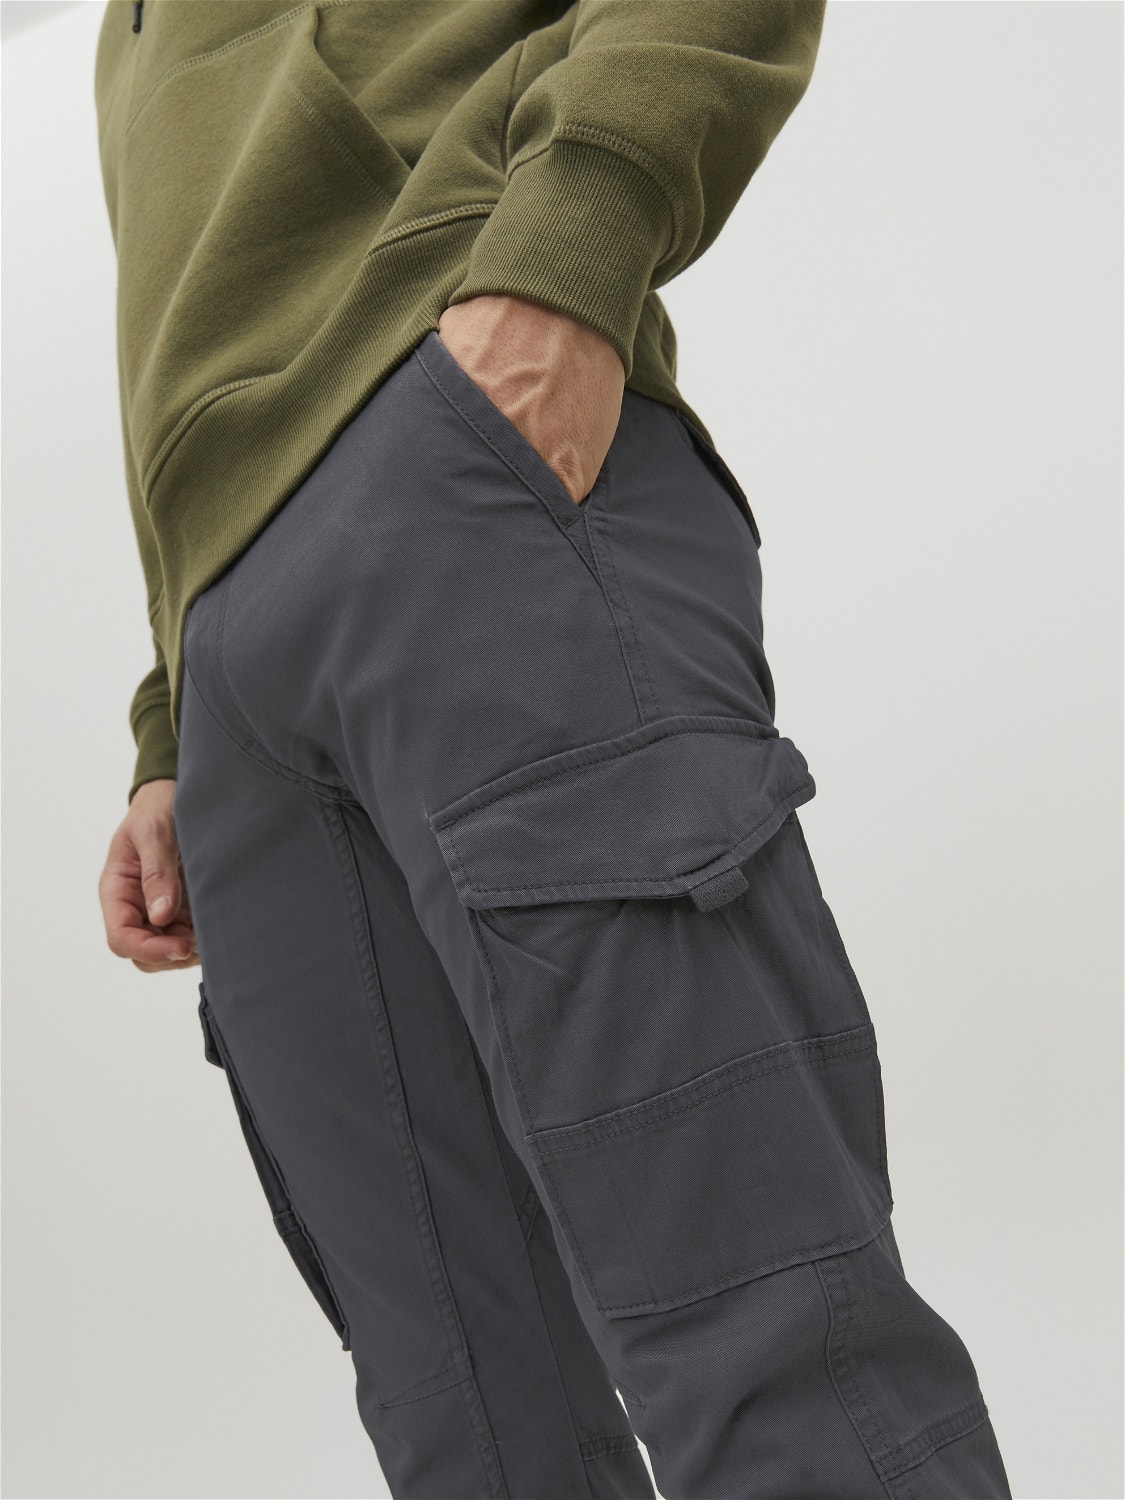 Jack & Jones Men's Cuffed Cargo Trousers Slim Fit Casual Combat Bottom  28W-36W